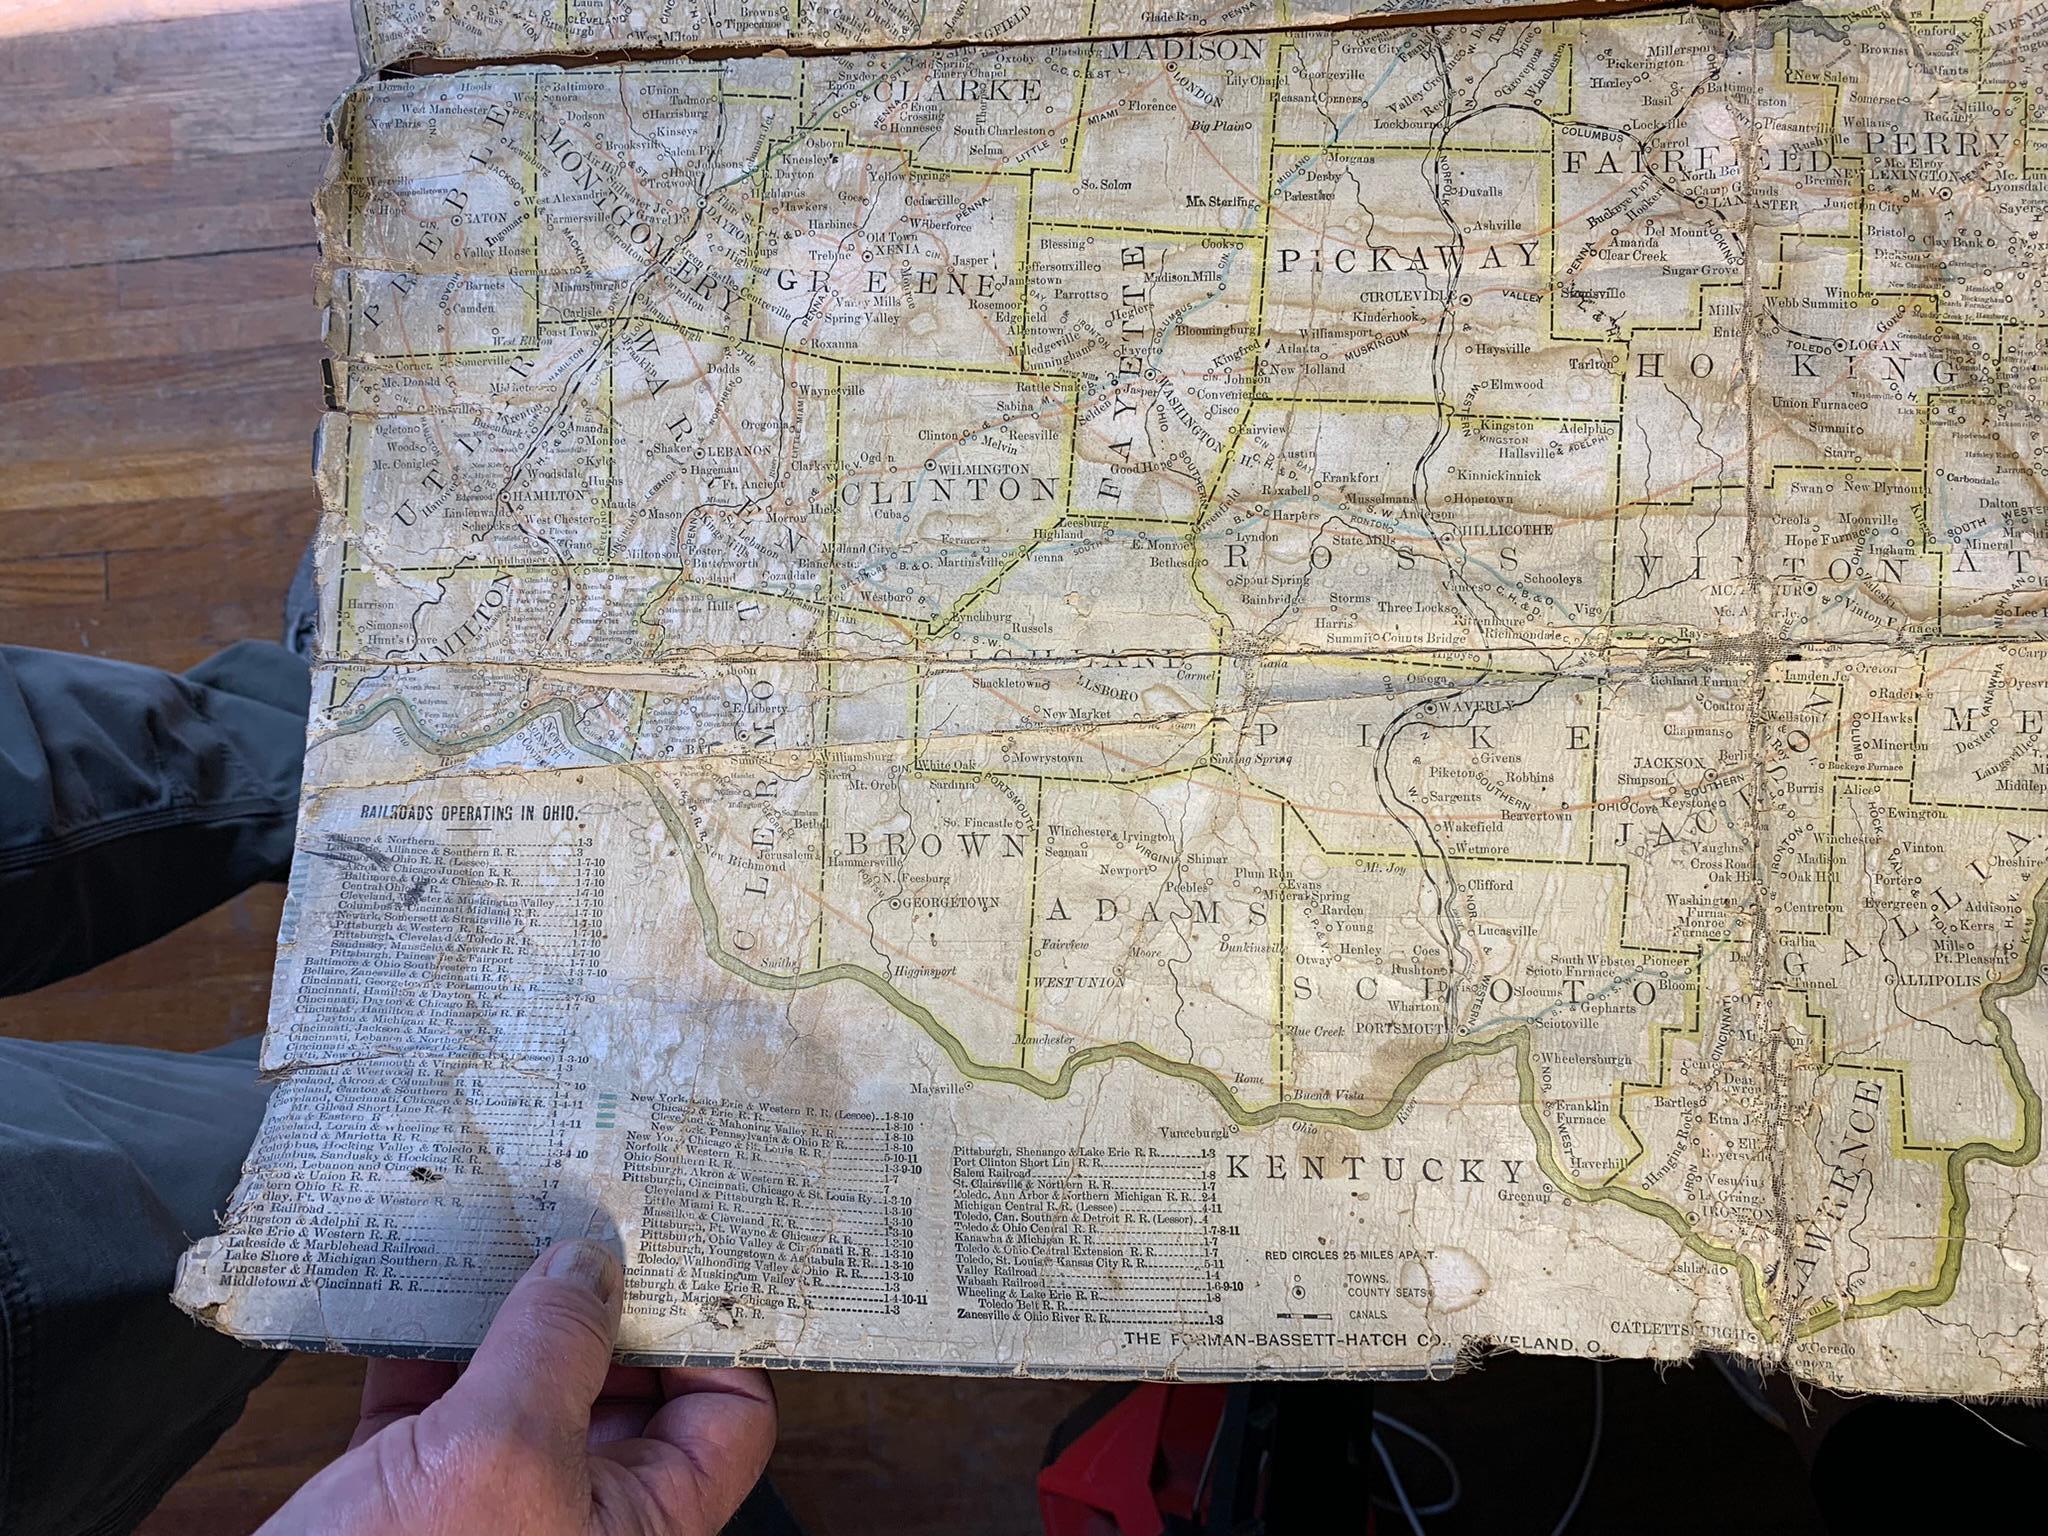 1895 Ohio Railroad Map on Canvas Map